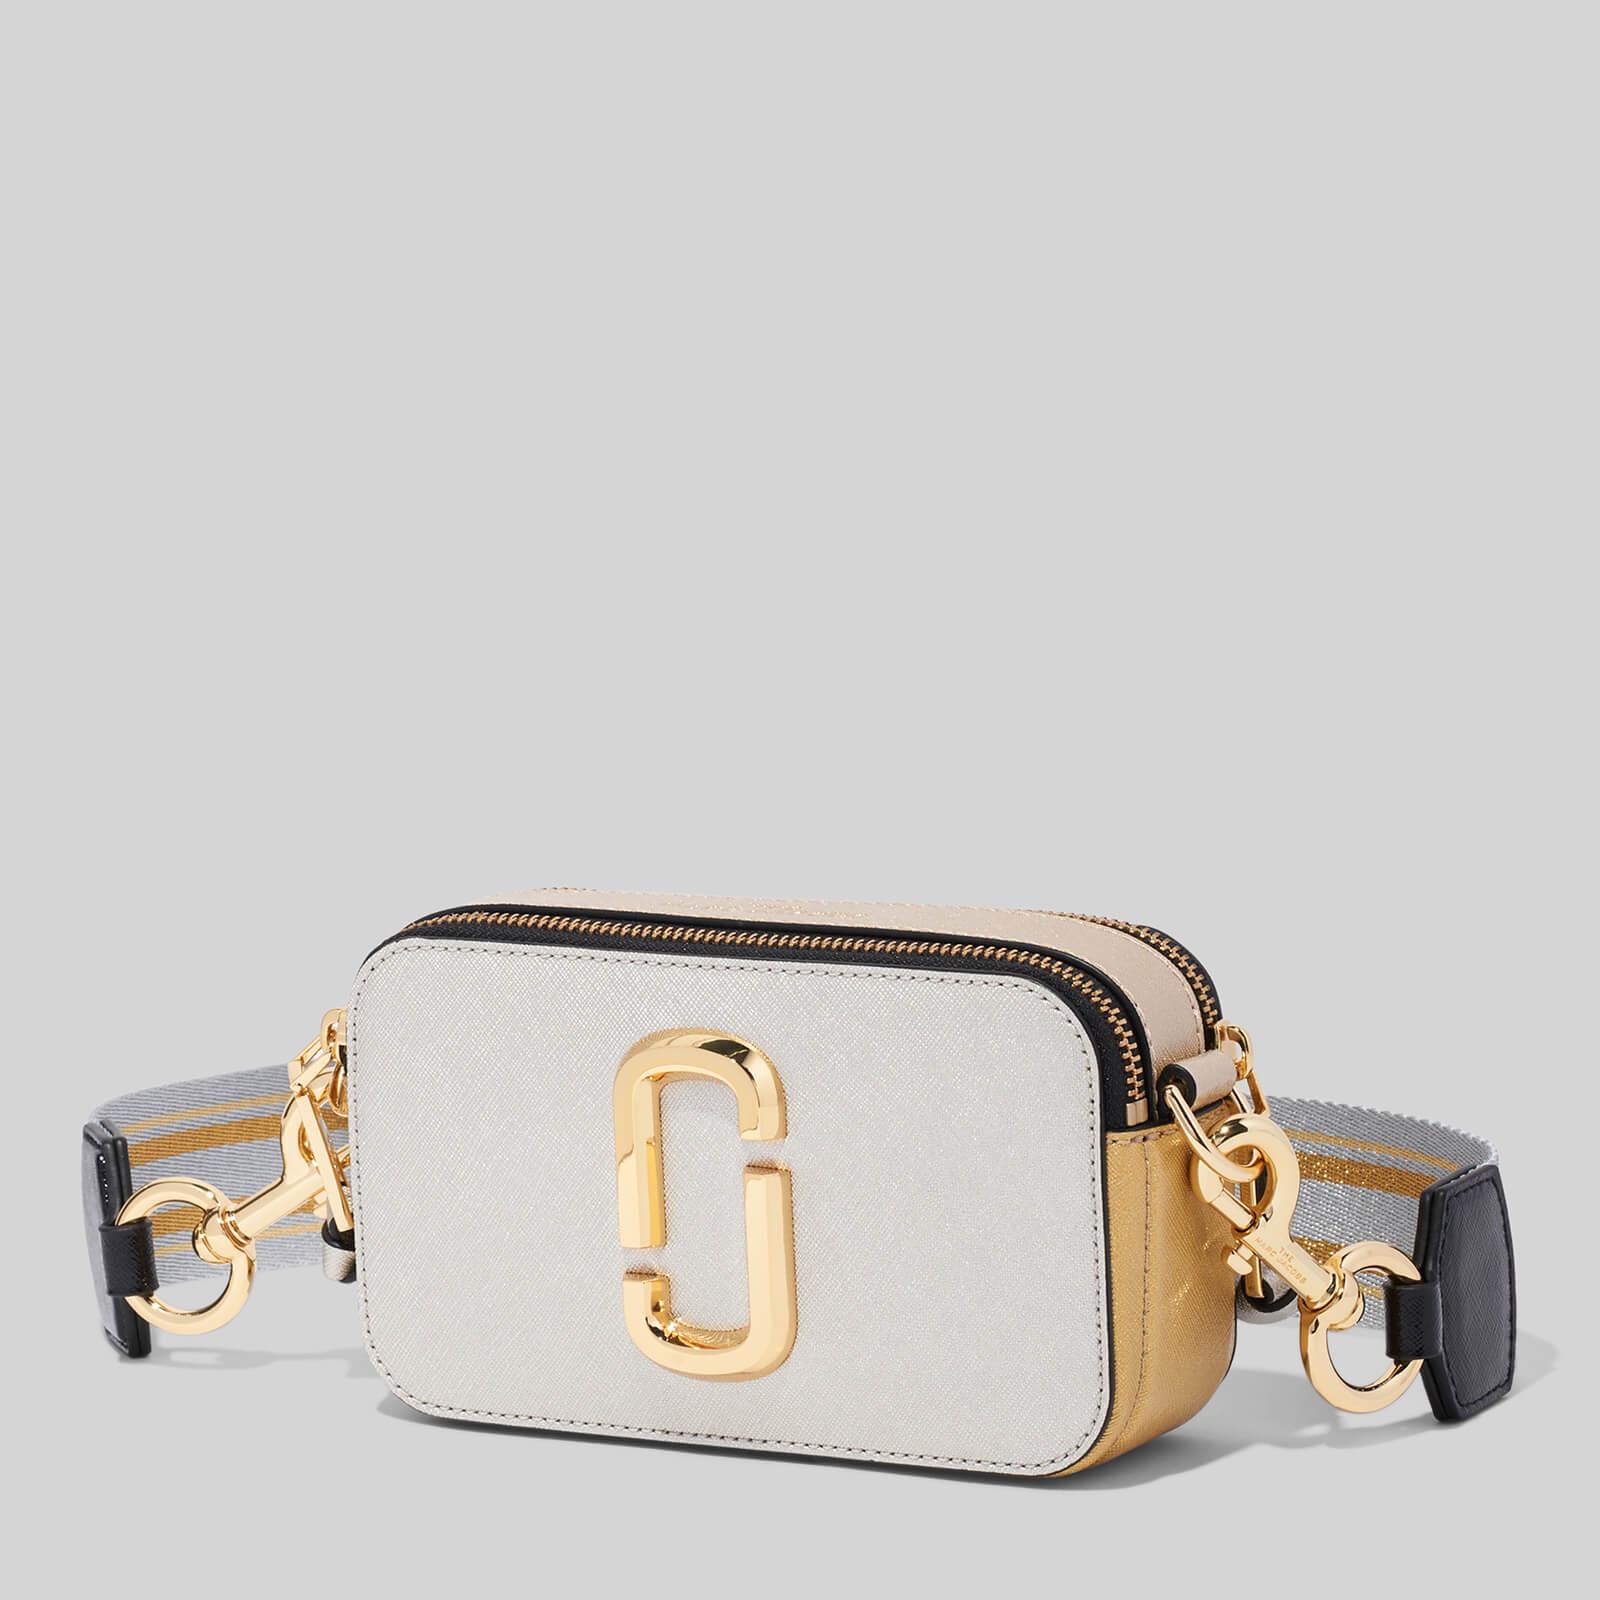 Marc Jacobs Snapshot Bag in Silver (Metallic) - Save 45% | Lyst